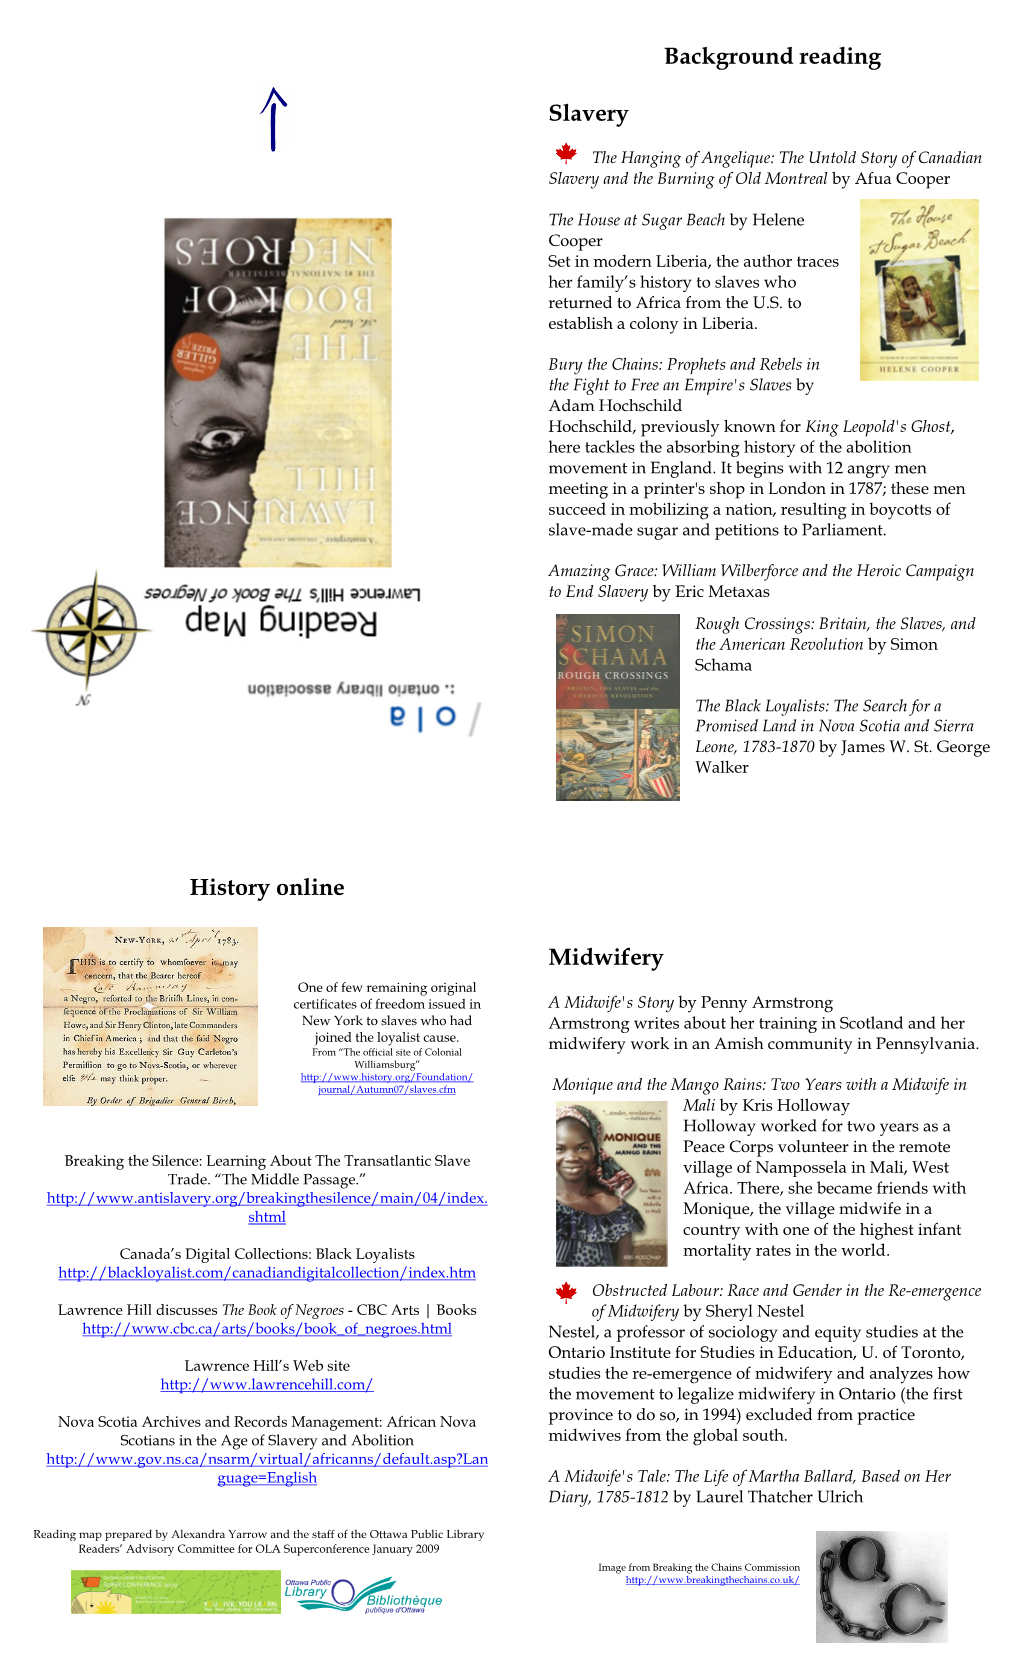 History Online Background Reading Slavery Midwifery